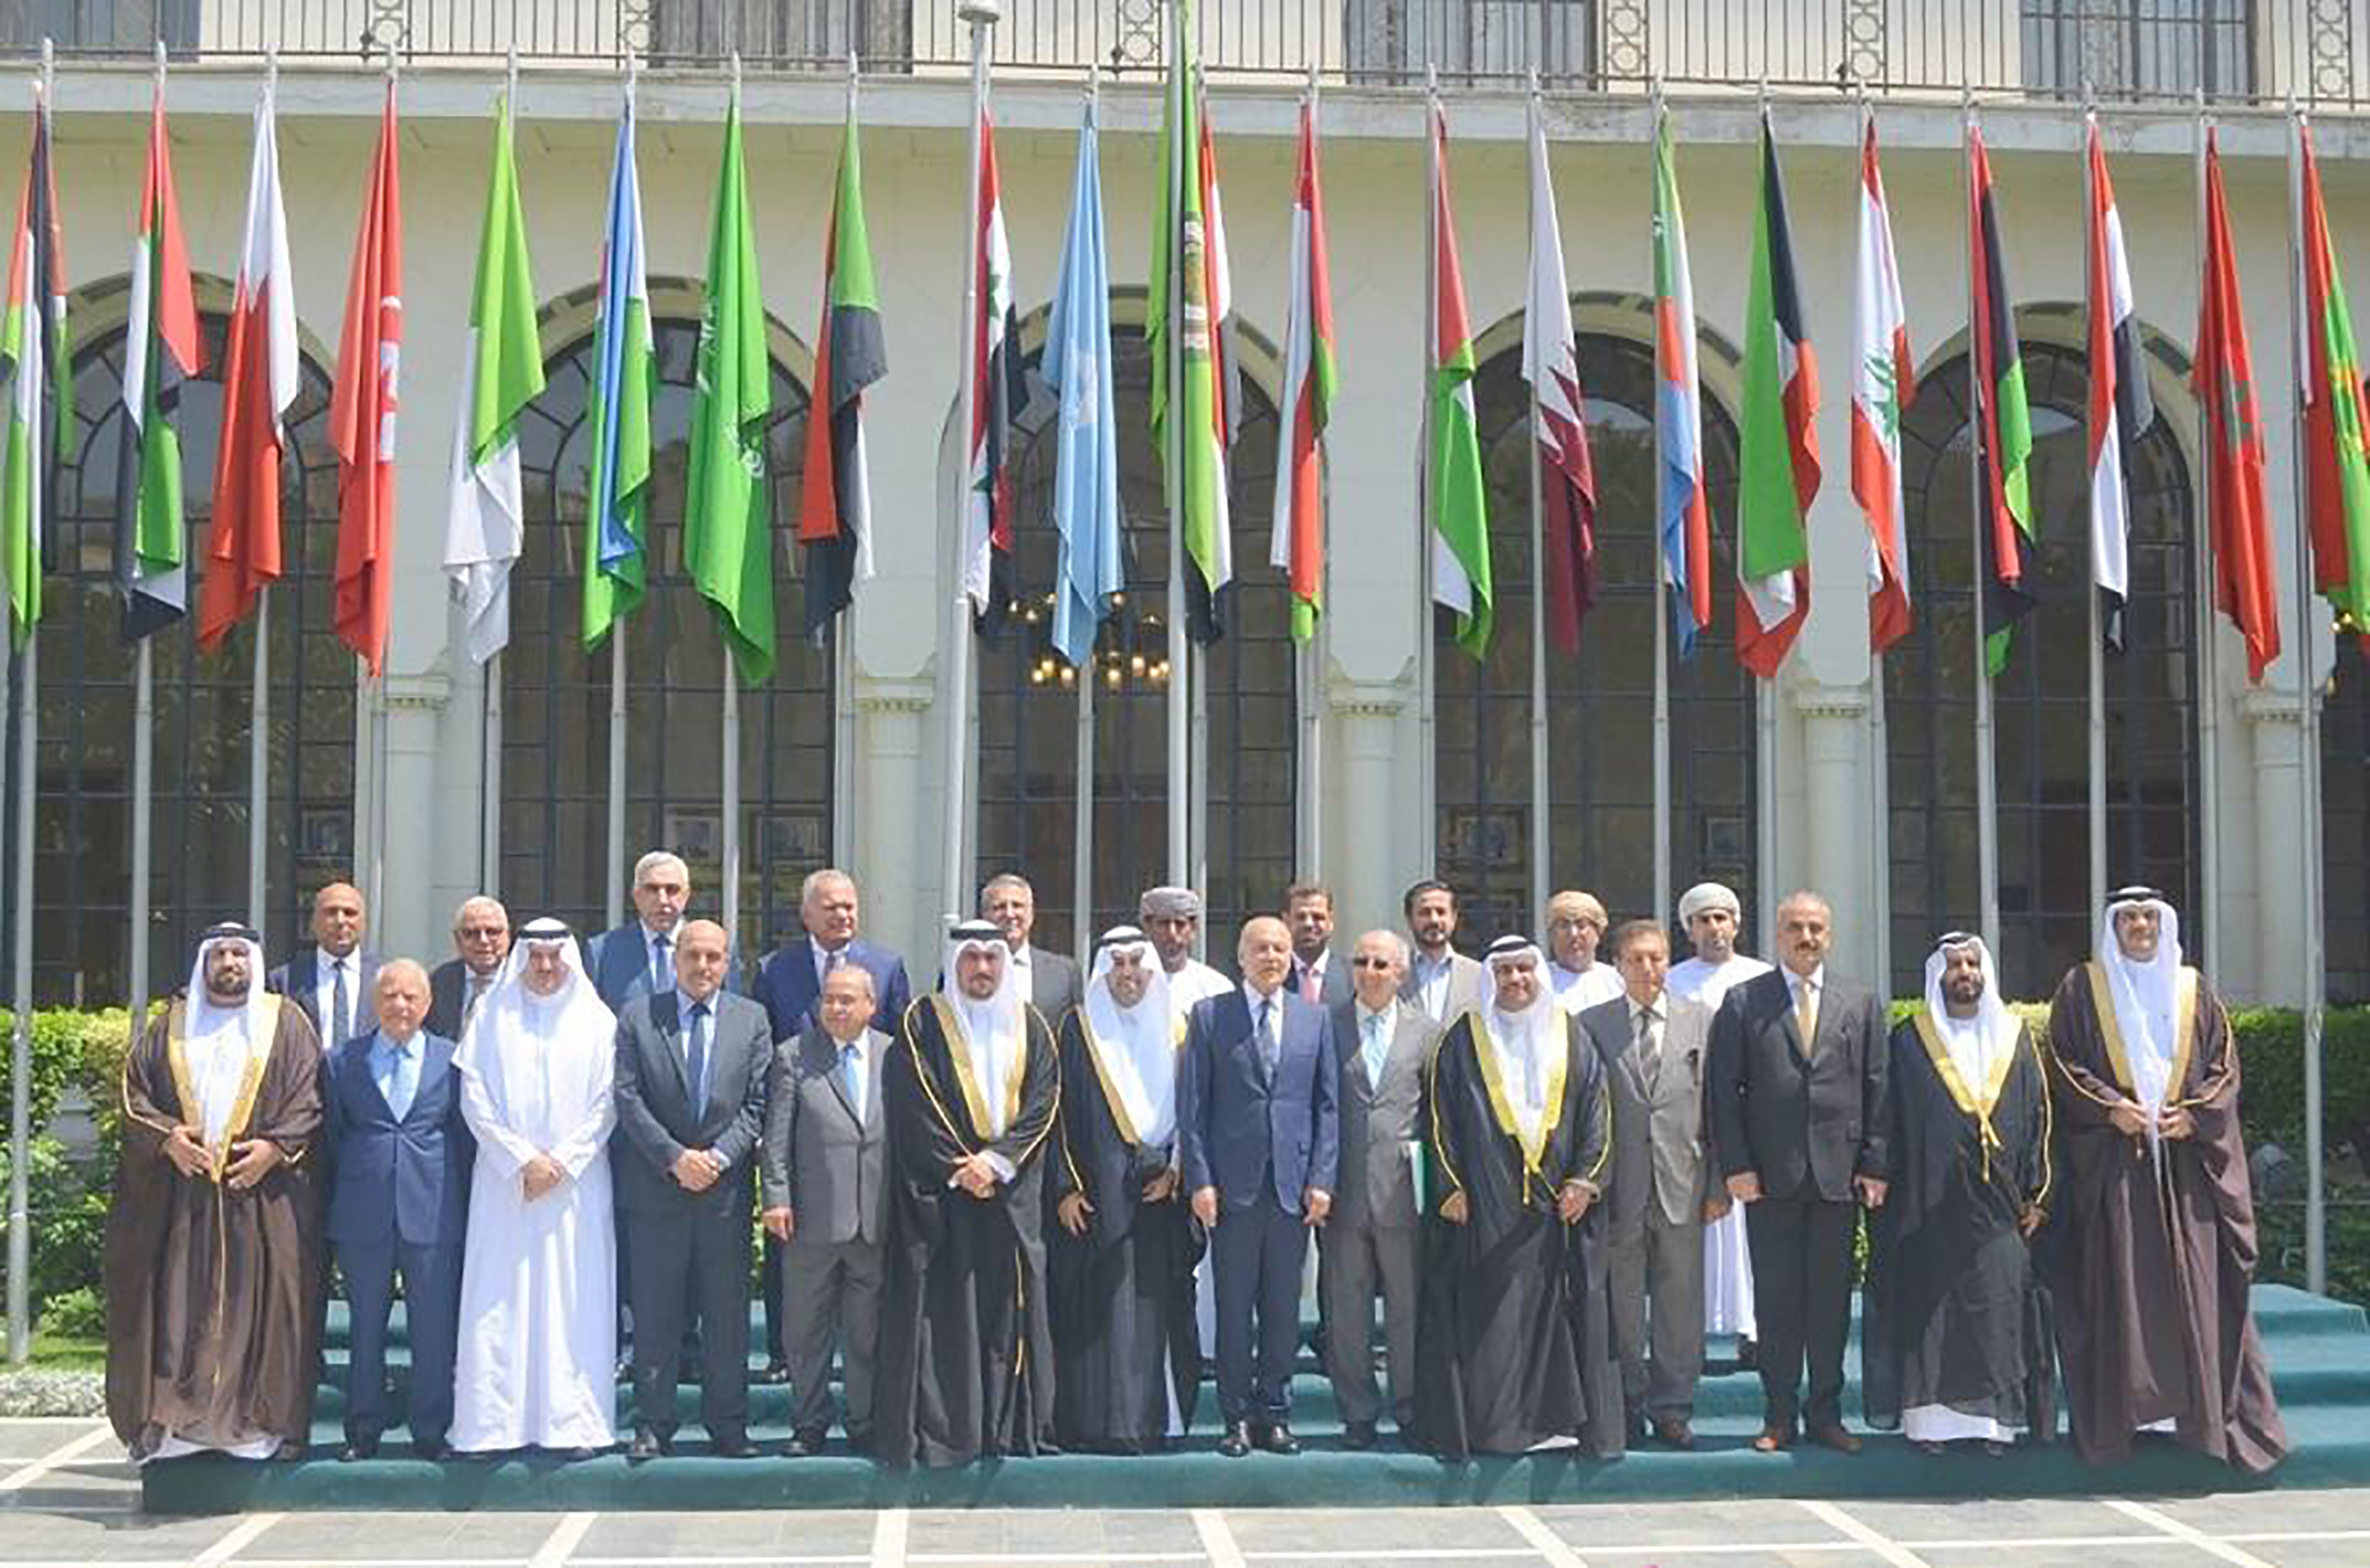 The seminar organized by the parliament at the Arab League's headquarters